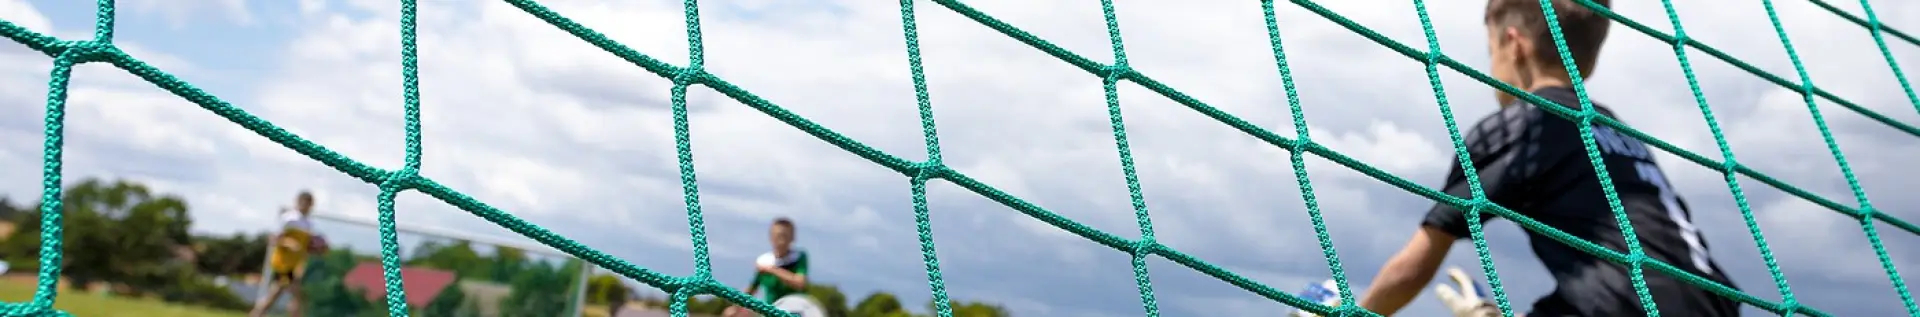 Fence Nets for baseball fields